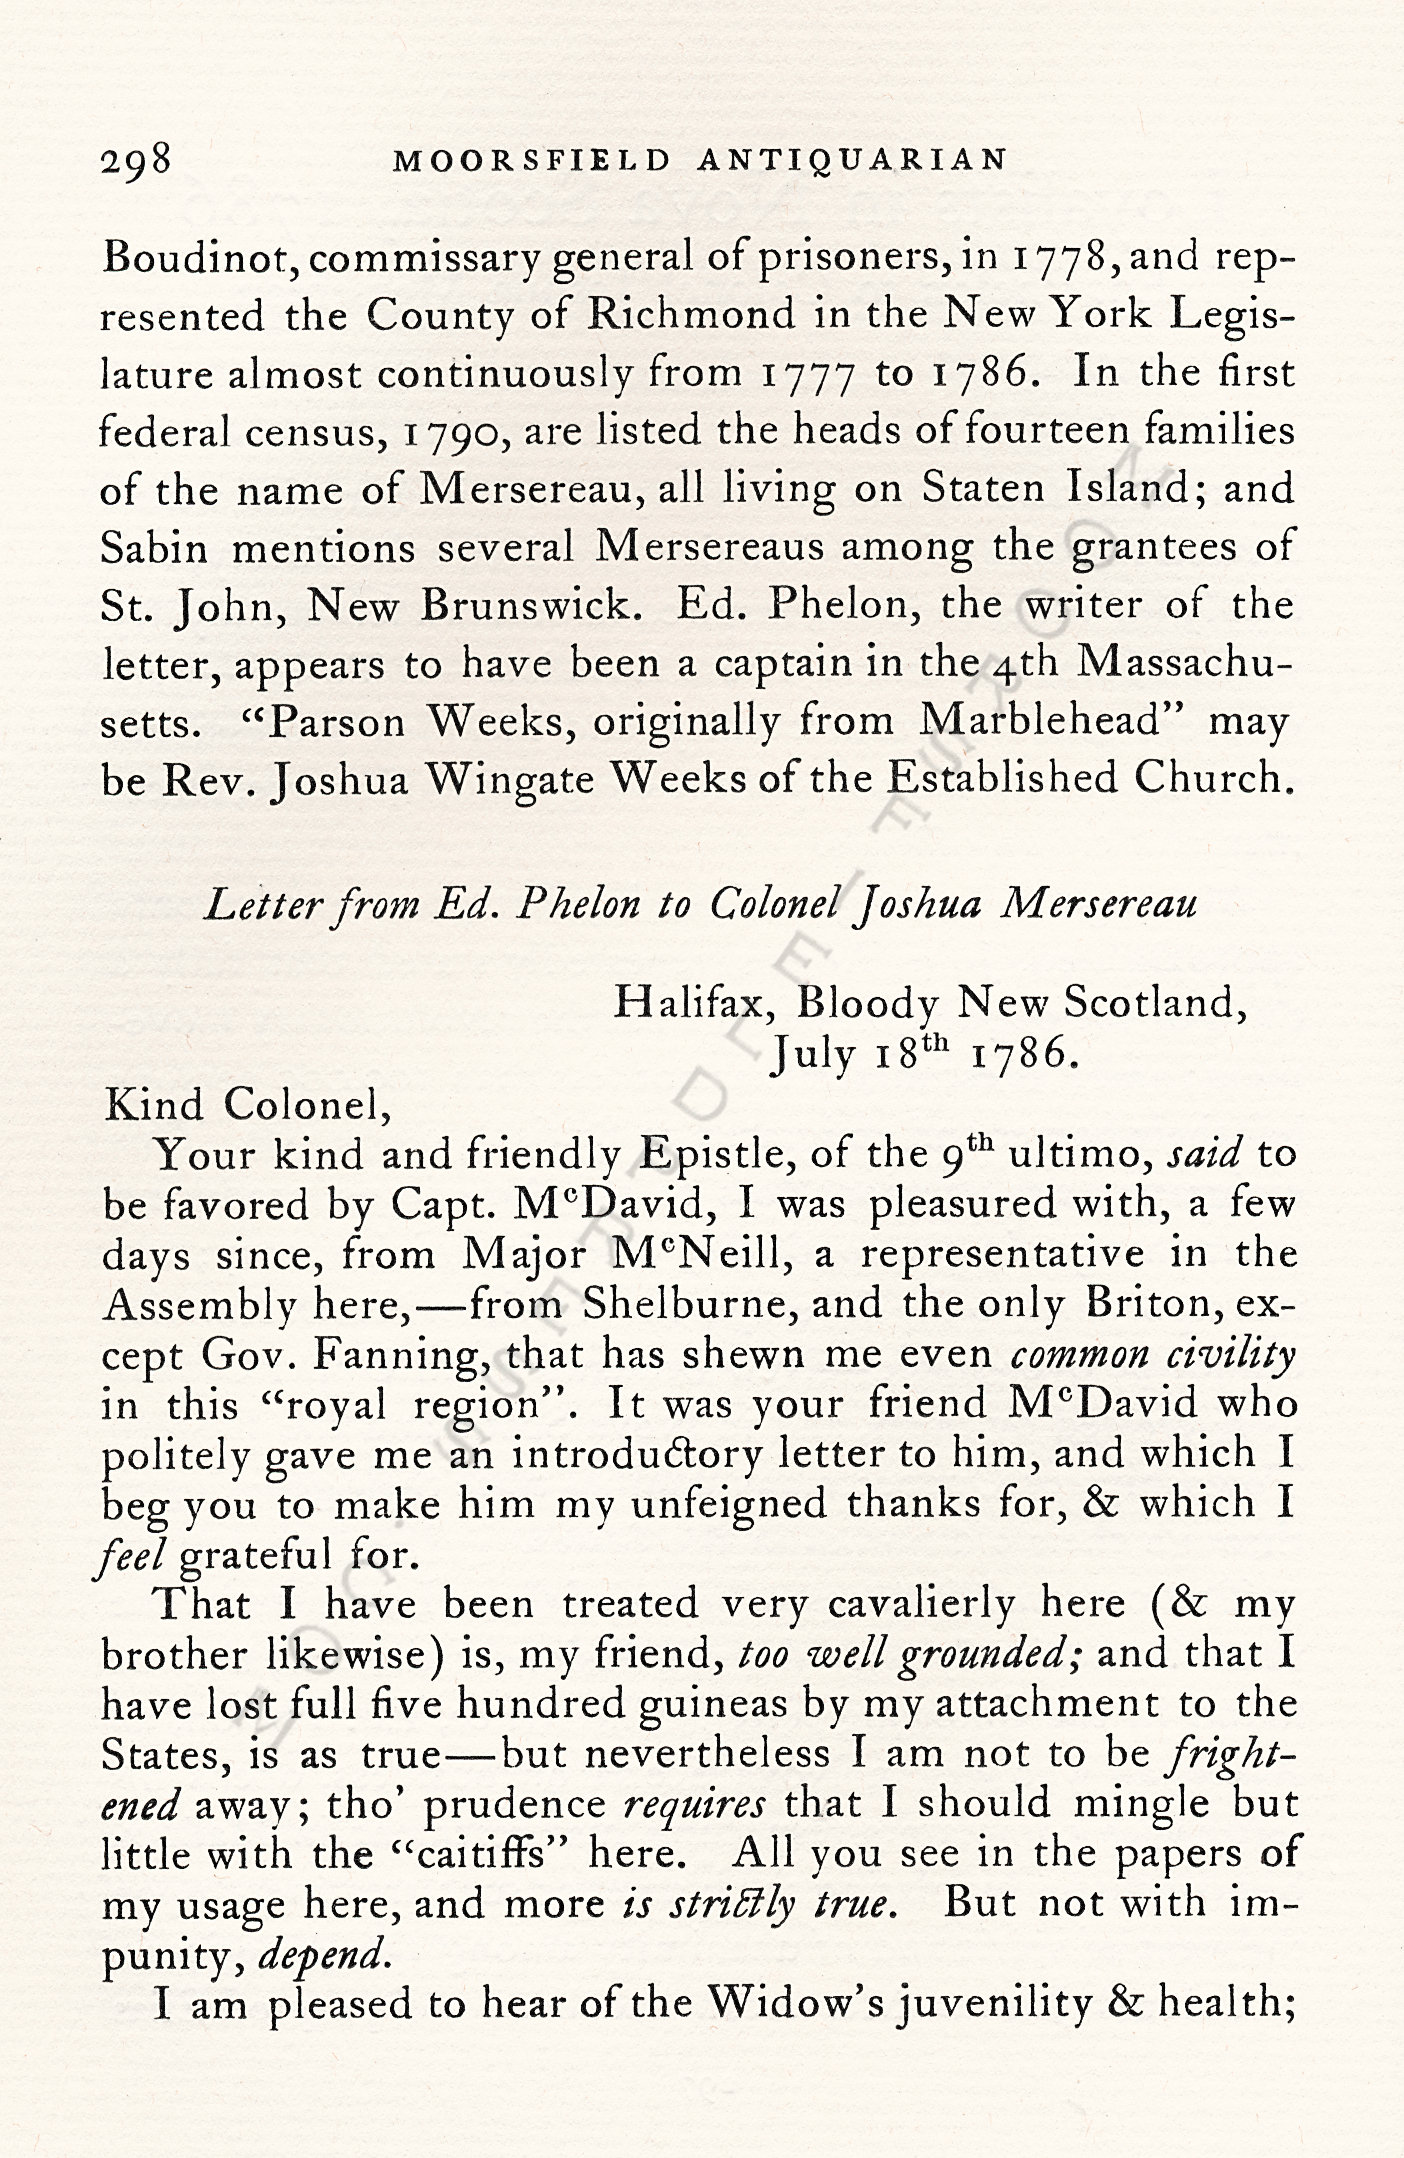 Loyalists
                      in Nova Scotia 1786: Ed. Phelon to Colonel Joshua
                      Mersereau